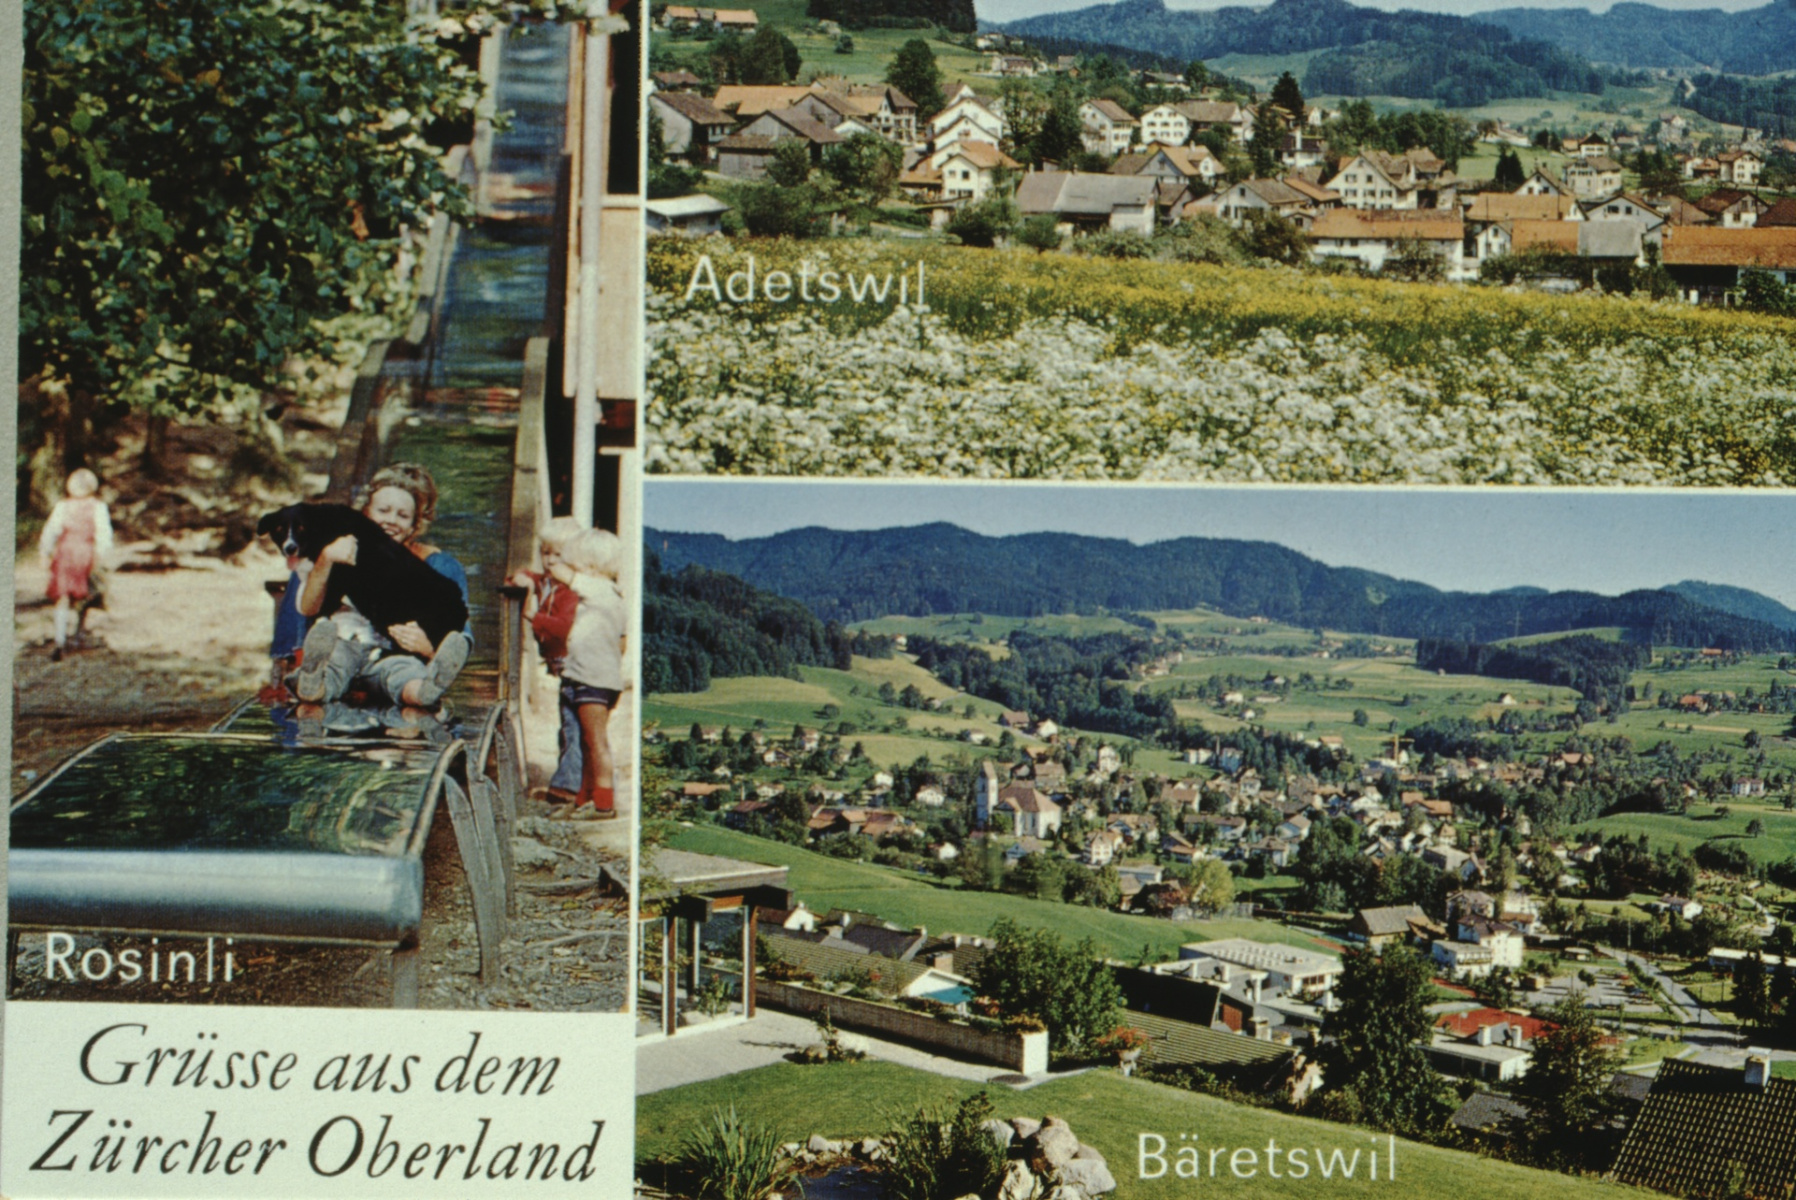 Postkarte Adetswil - Bäretswil